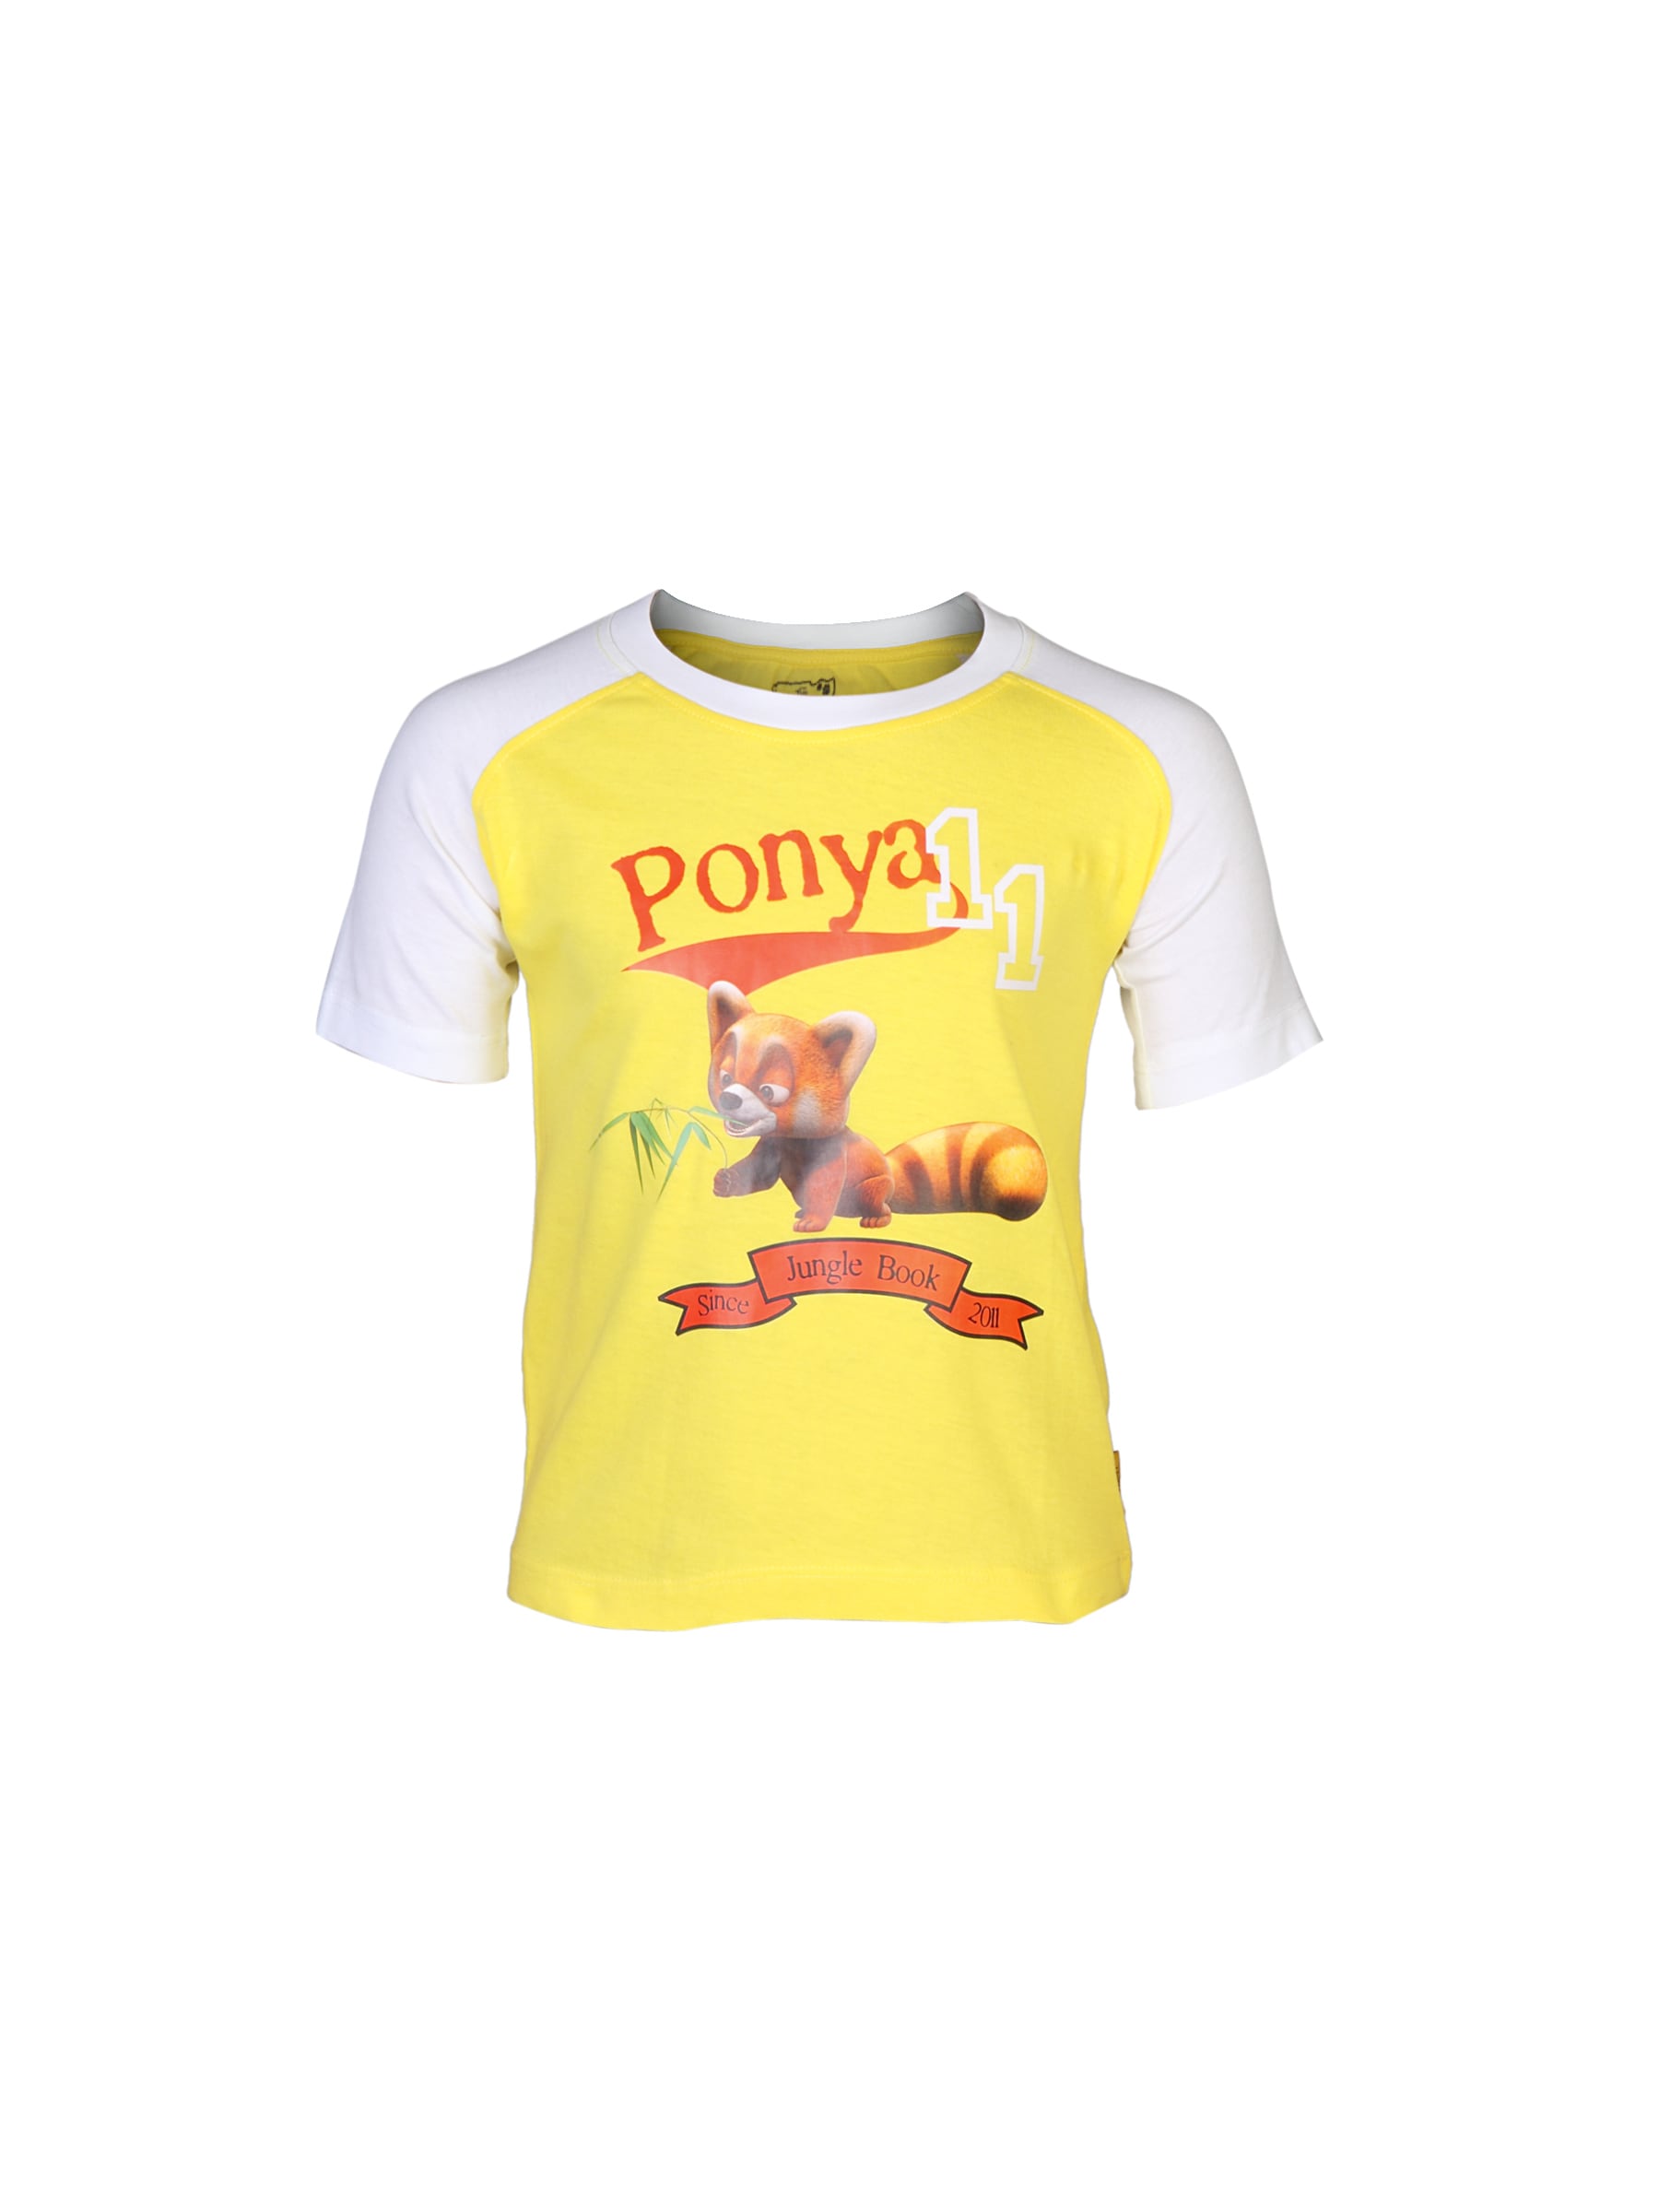 Jungle Book Boys Ponya 11 Yellow T-shirt